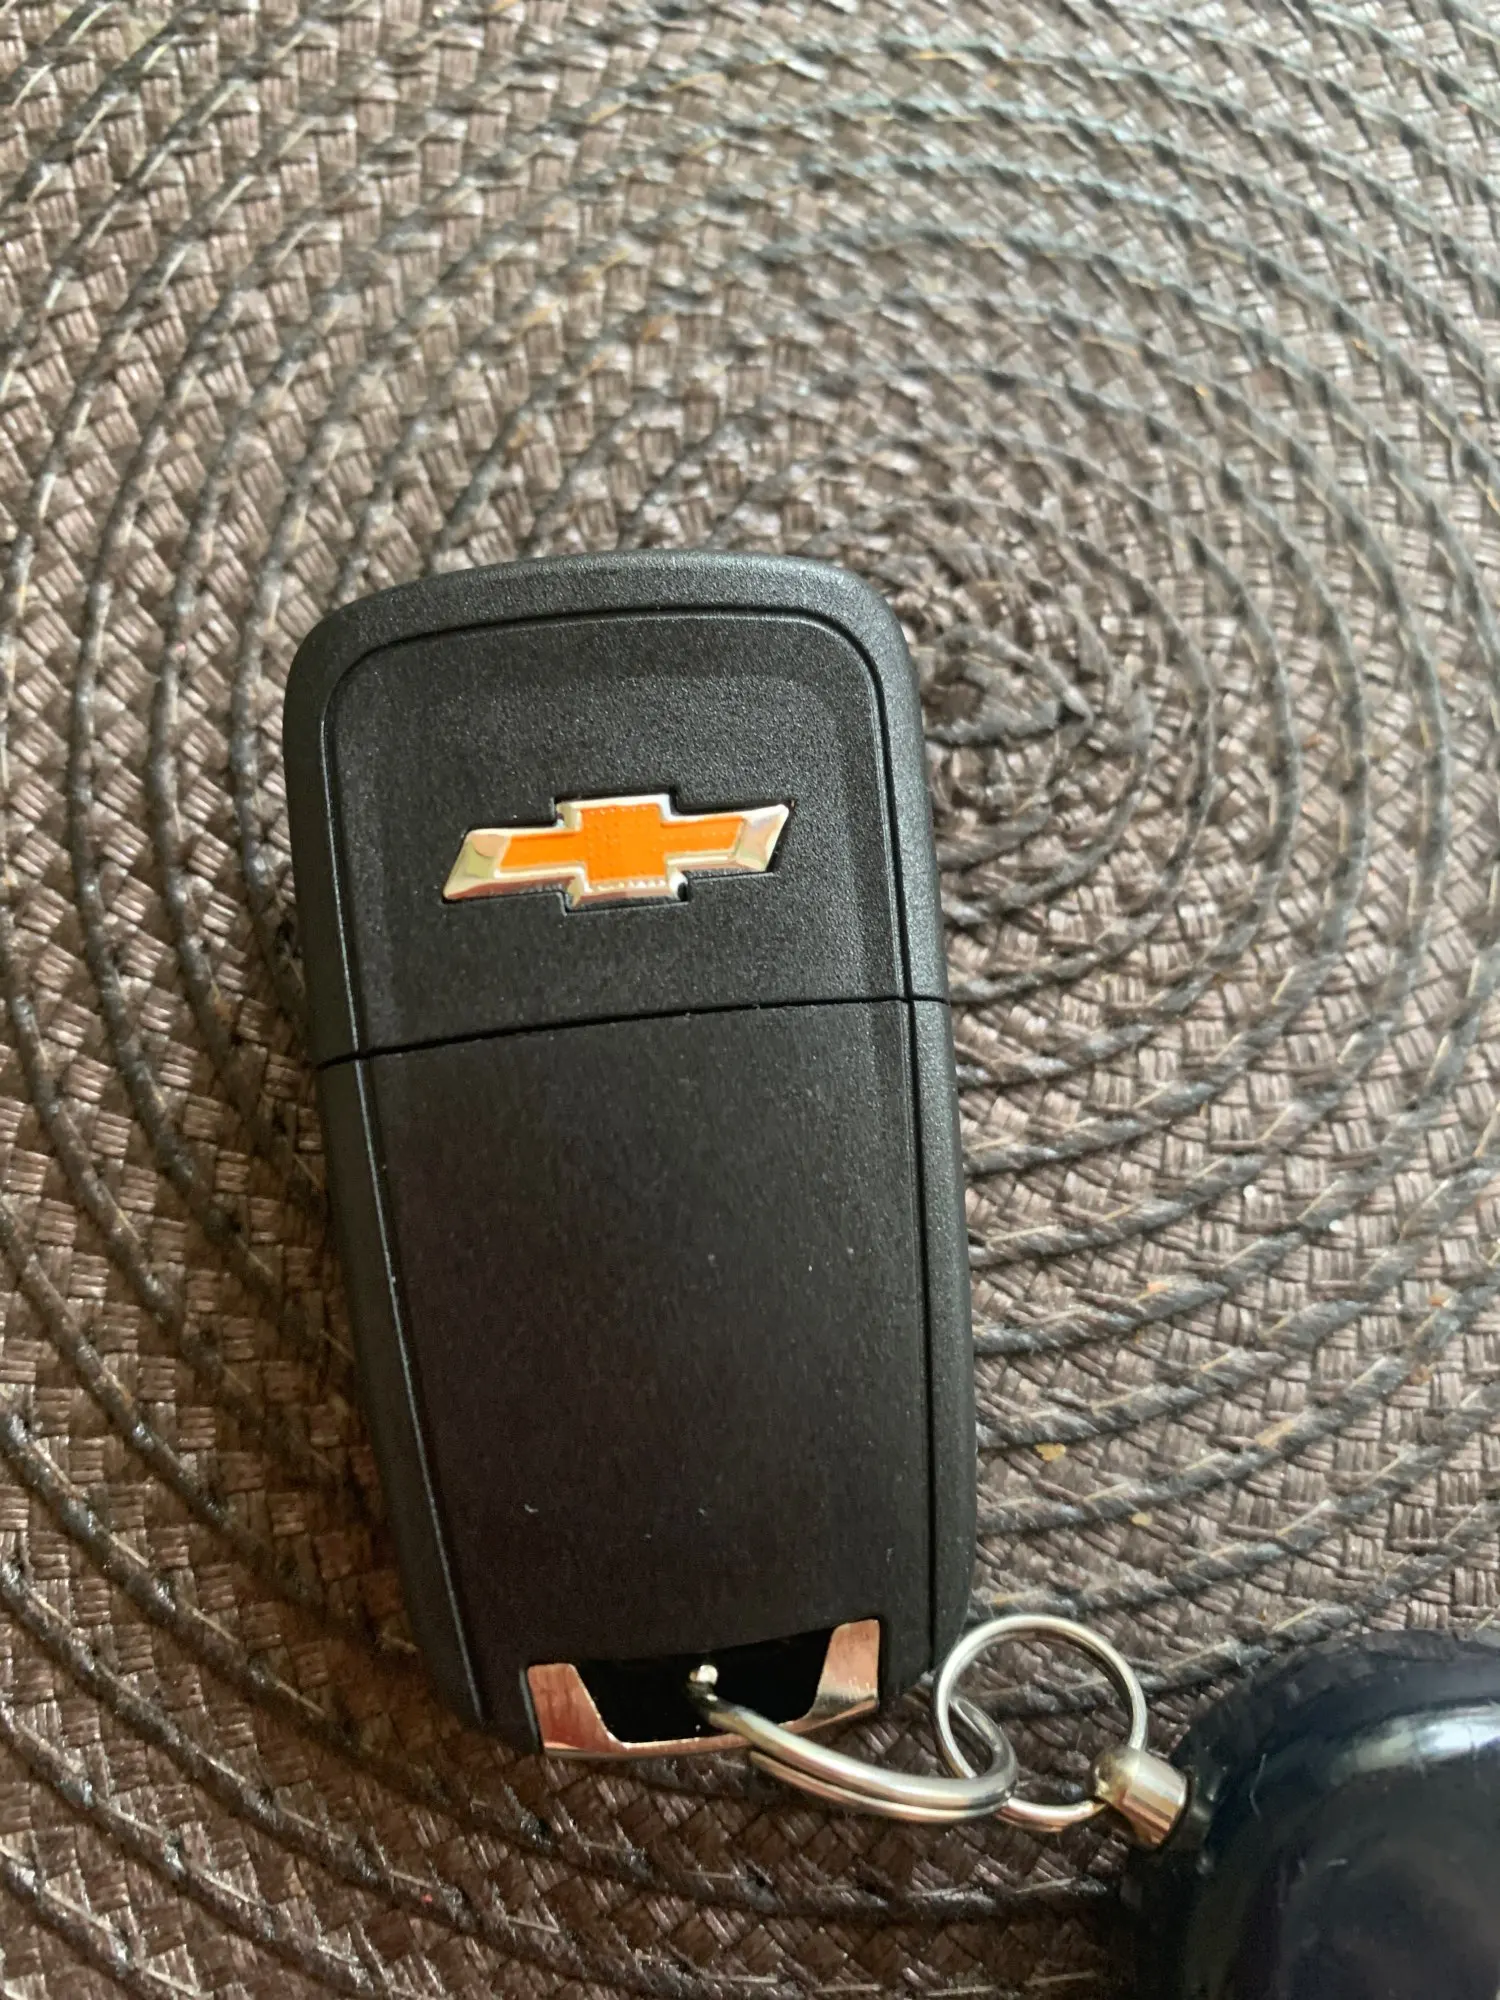 PREISEI 3 Button Replacement Flip Folding Remote Car Key Shell Case For Chevrolet Cruze Epica Lova Camaro Impala Aveo